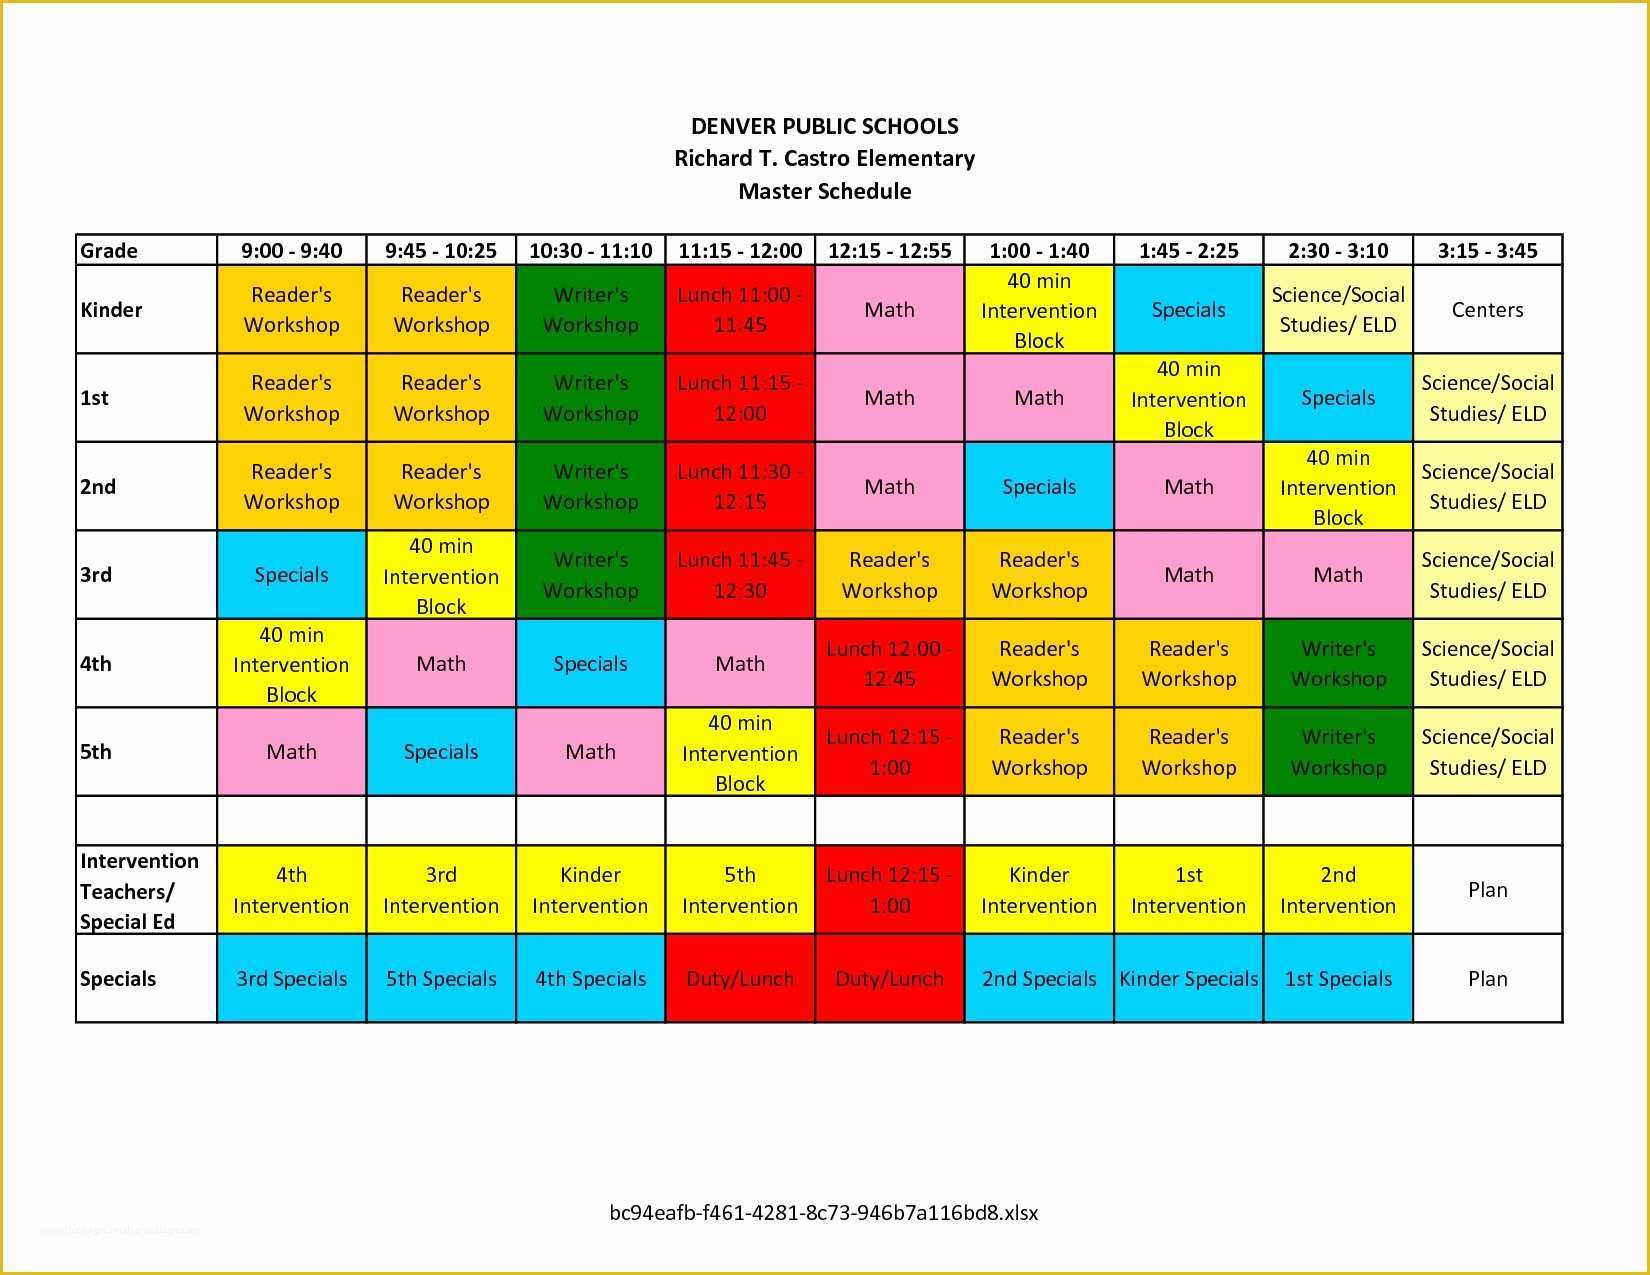 Free School Master Schedule Template Of Elementary School Master Schedule Template